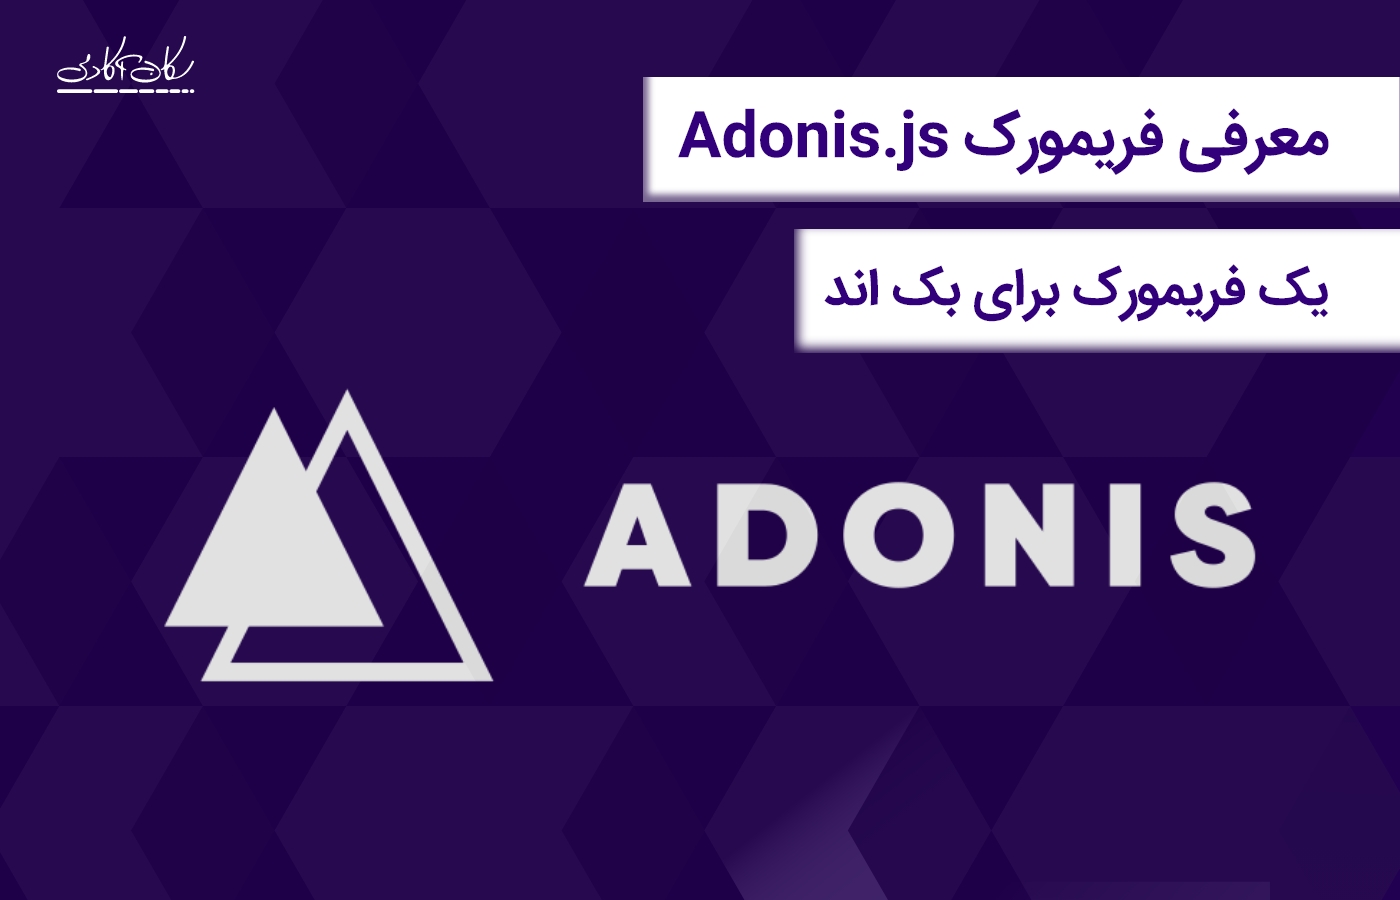 Adonis.js، یک فریمورک MVC برای توسعه بک اند با Node.js